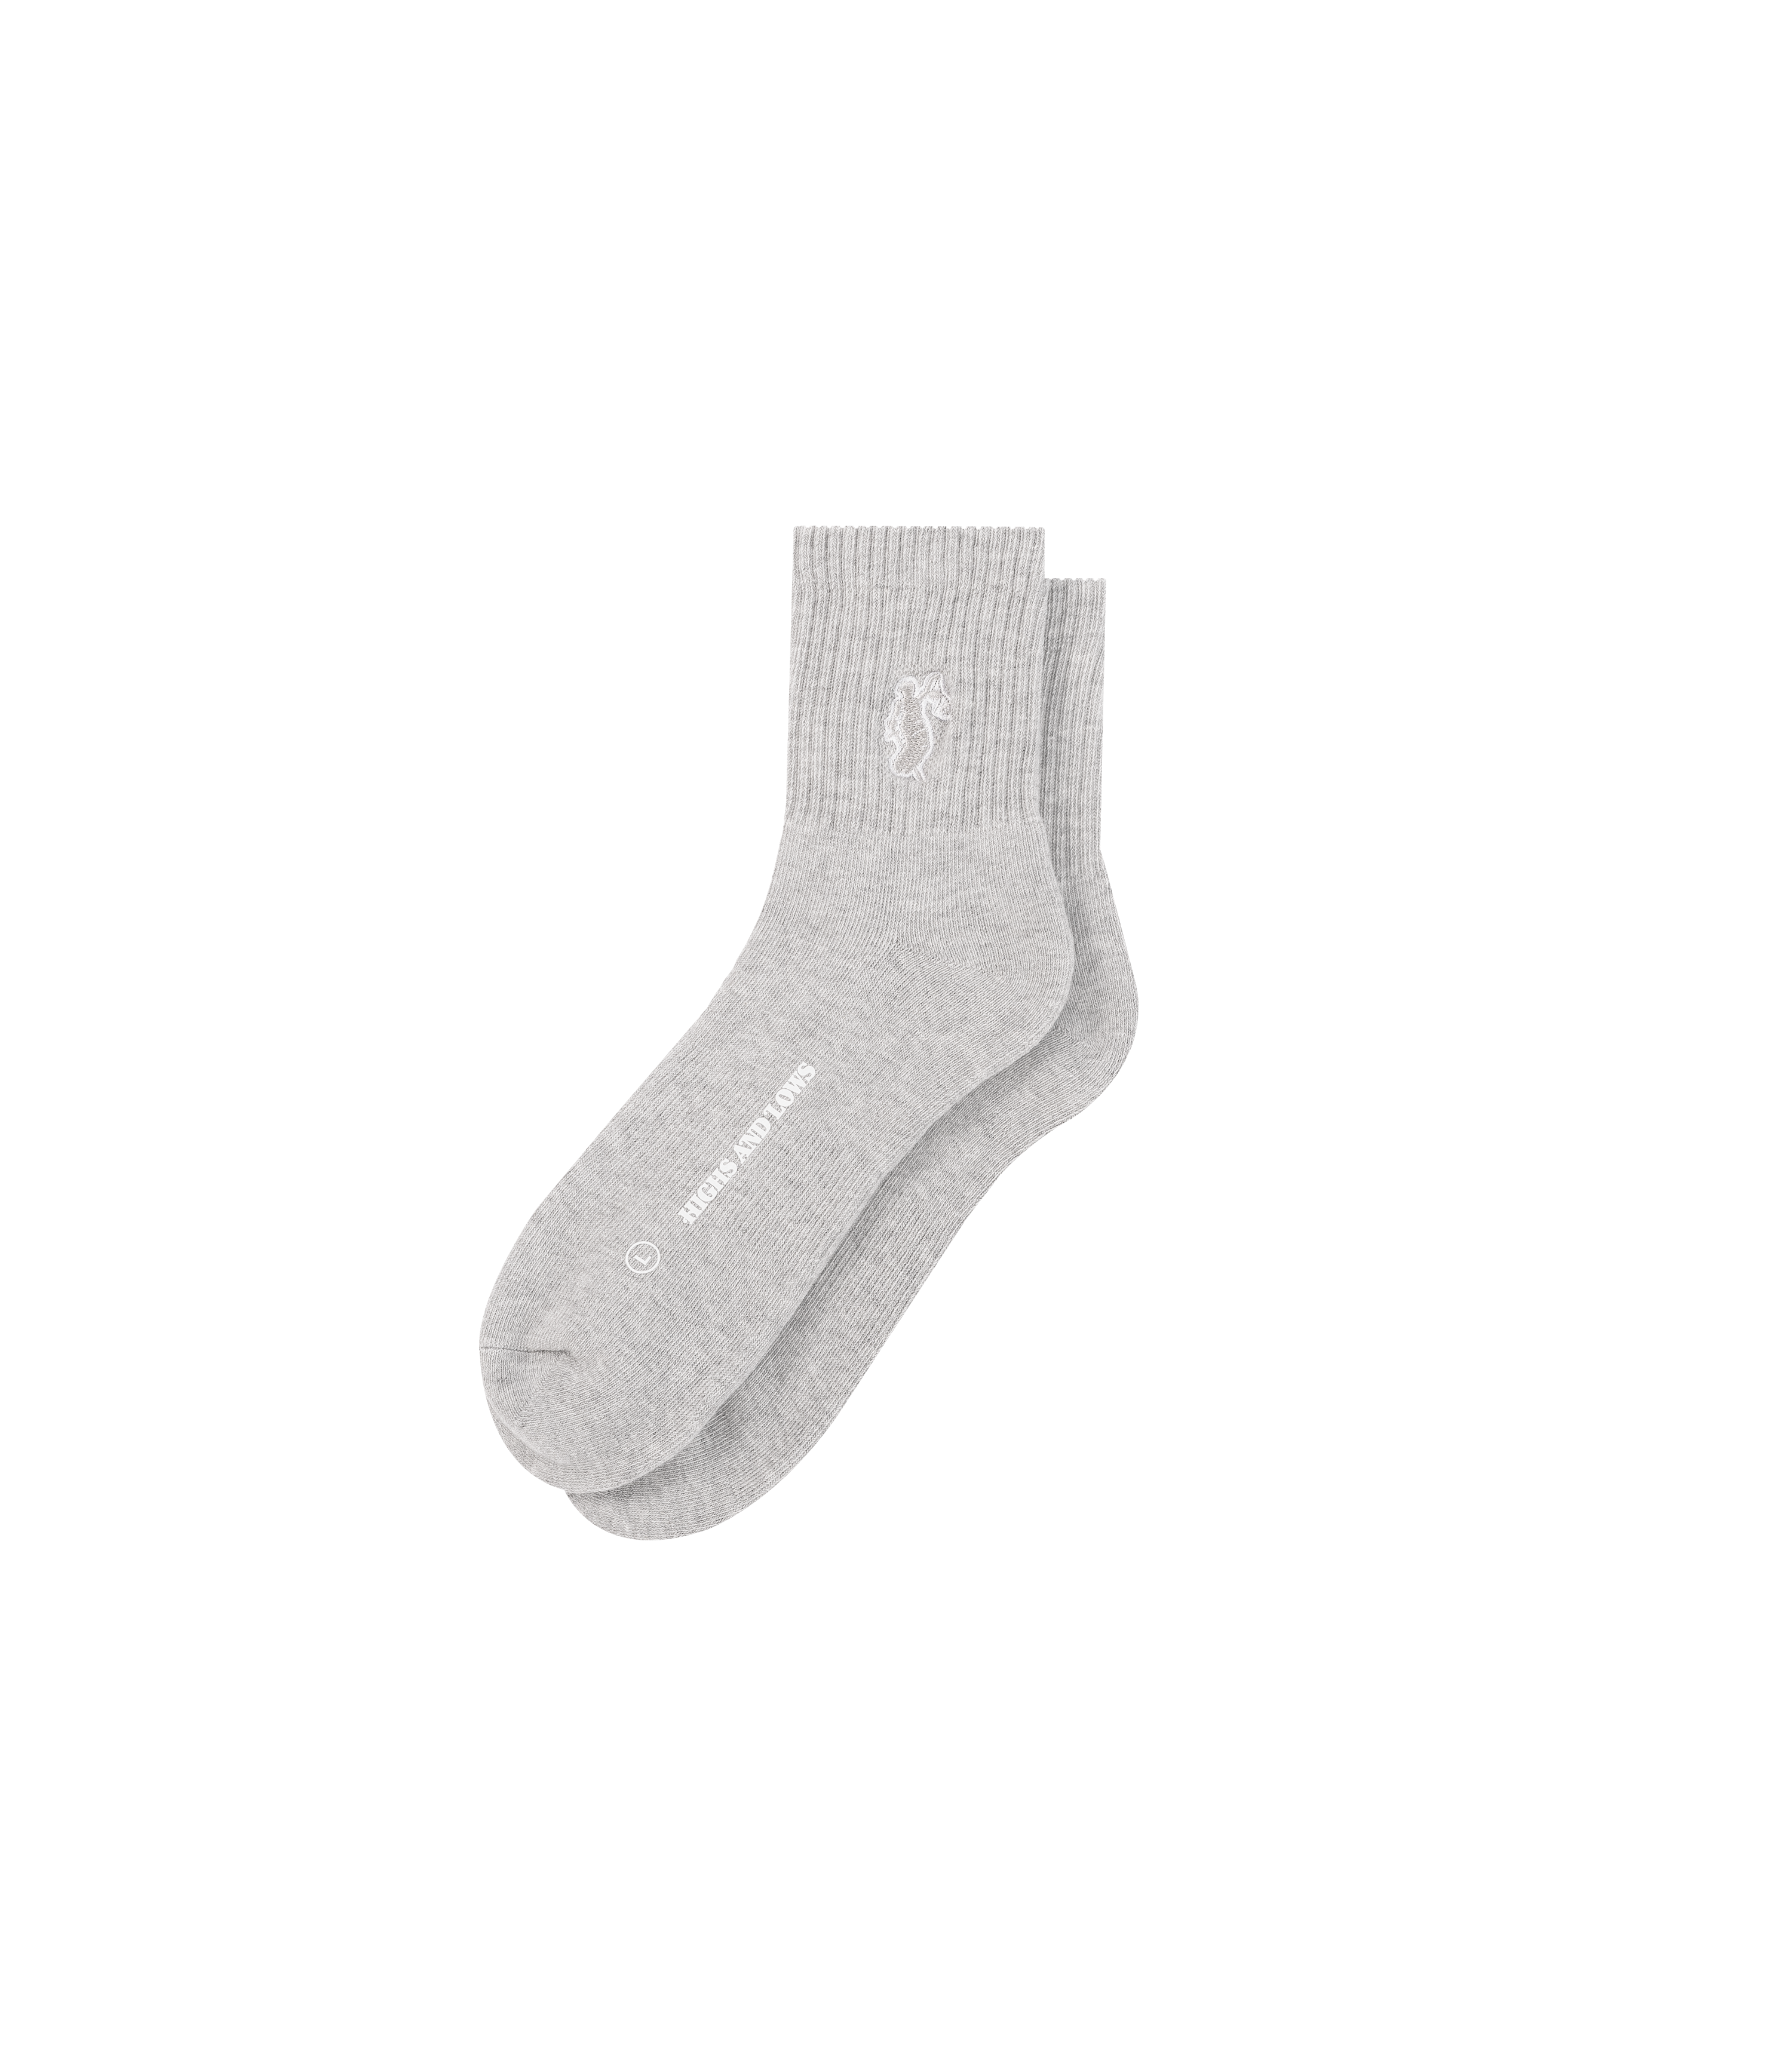 Lady Justice Socks Mid - Grey